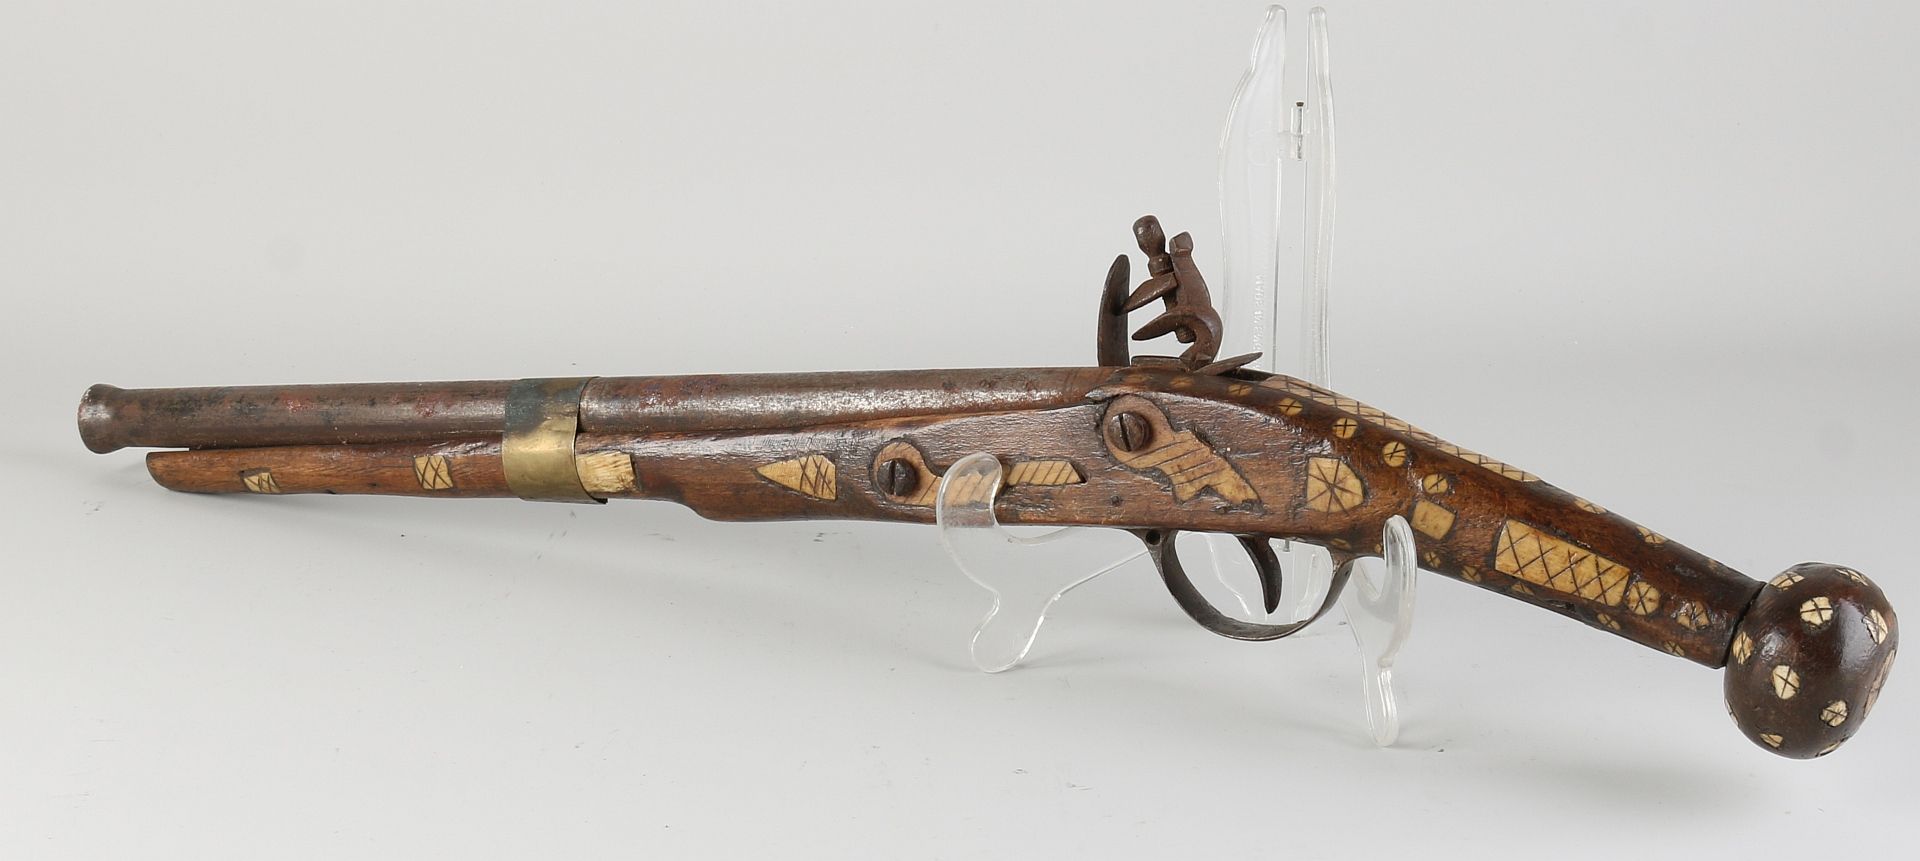 Antique flint gun - Image 3 of 3